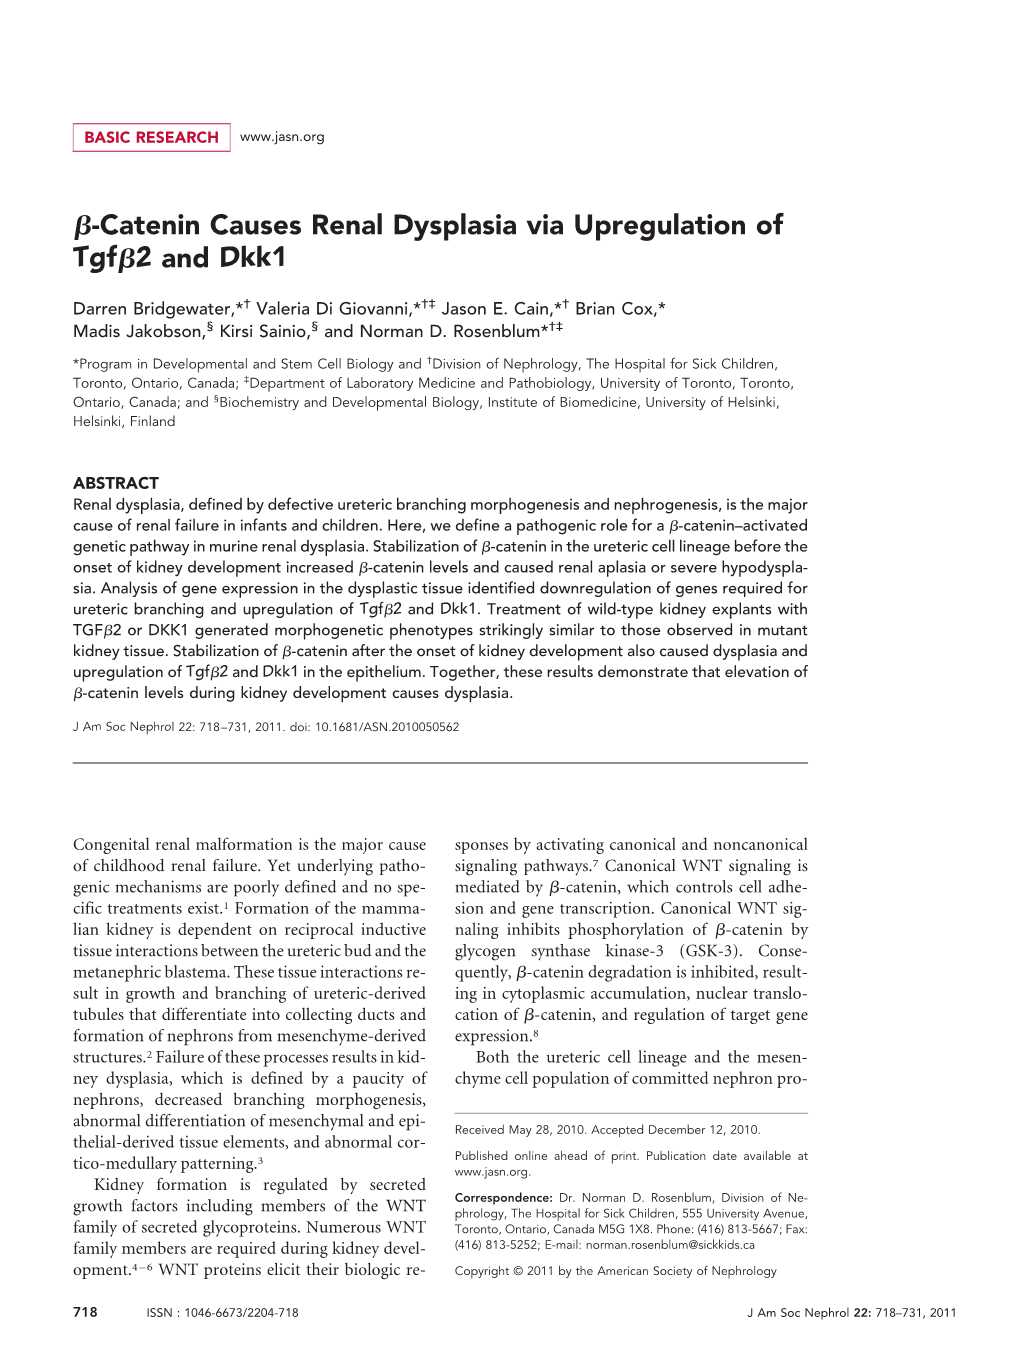 ß-Catenin Causes Renal Dysplasia Via Upregulation of Tgfß2 and Dkk1